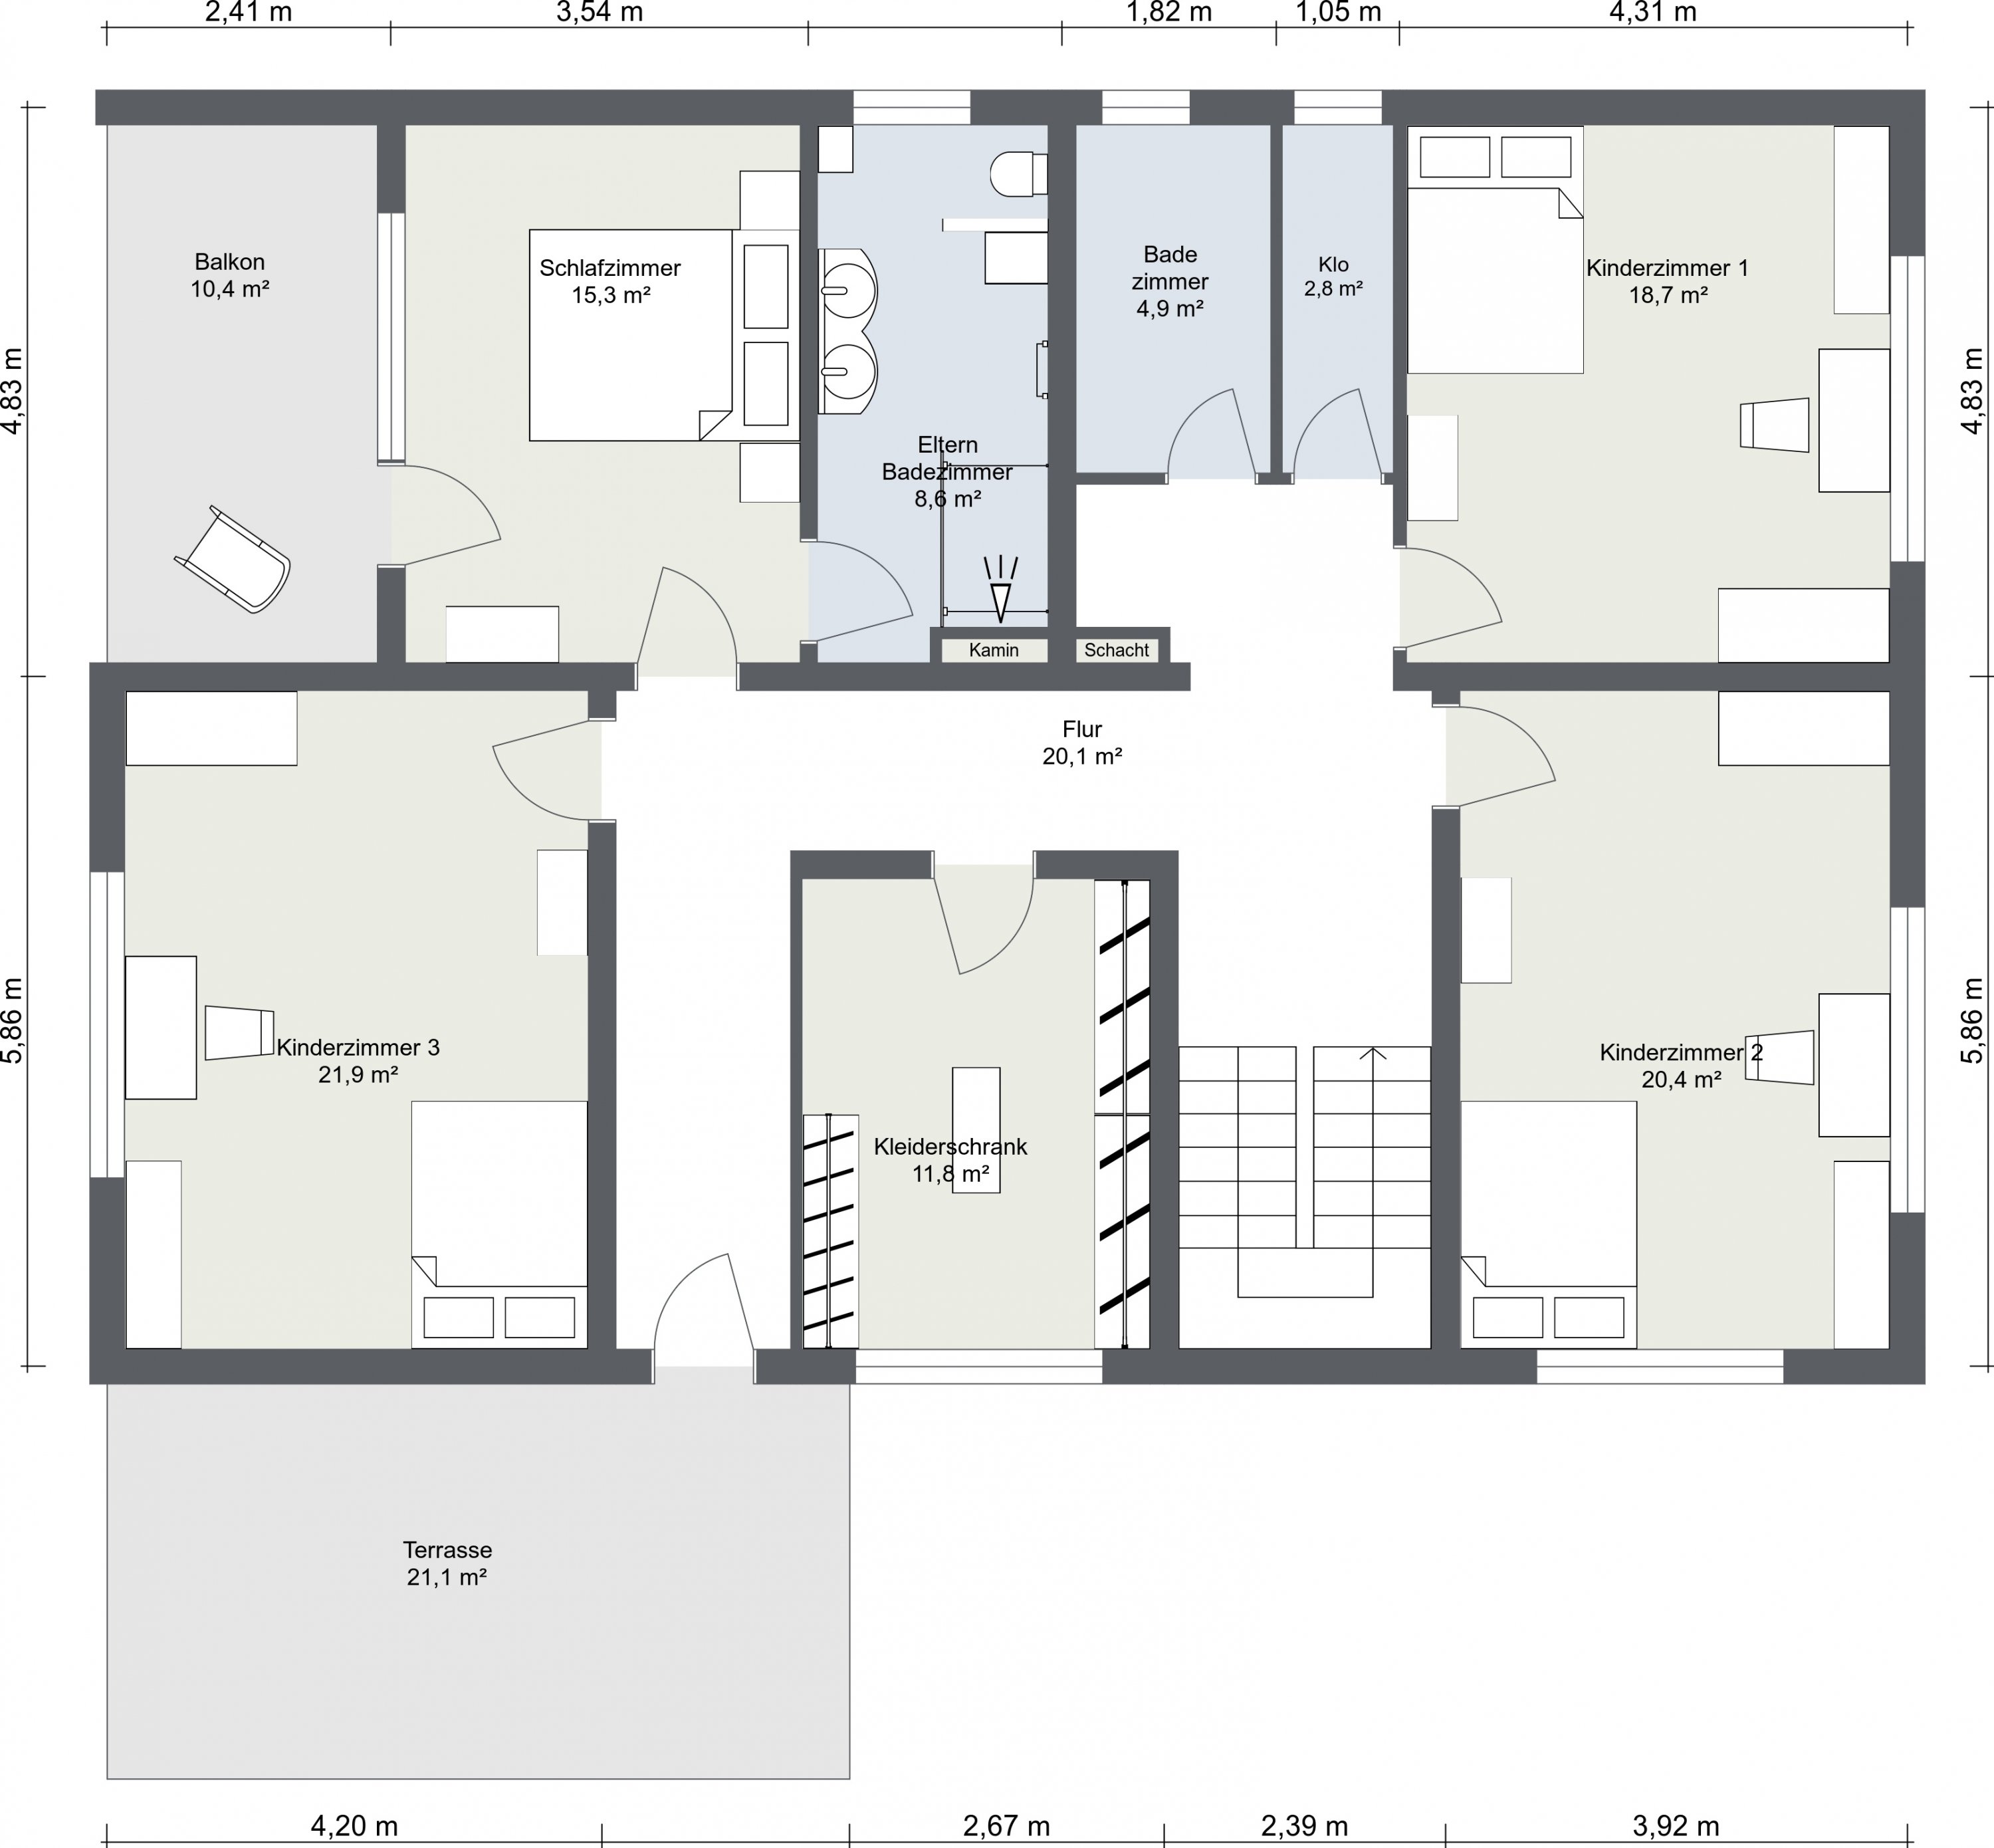 altbausanierung-1966-zweifamilienhaus-skizze-grundriss-273161-3.jpeg